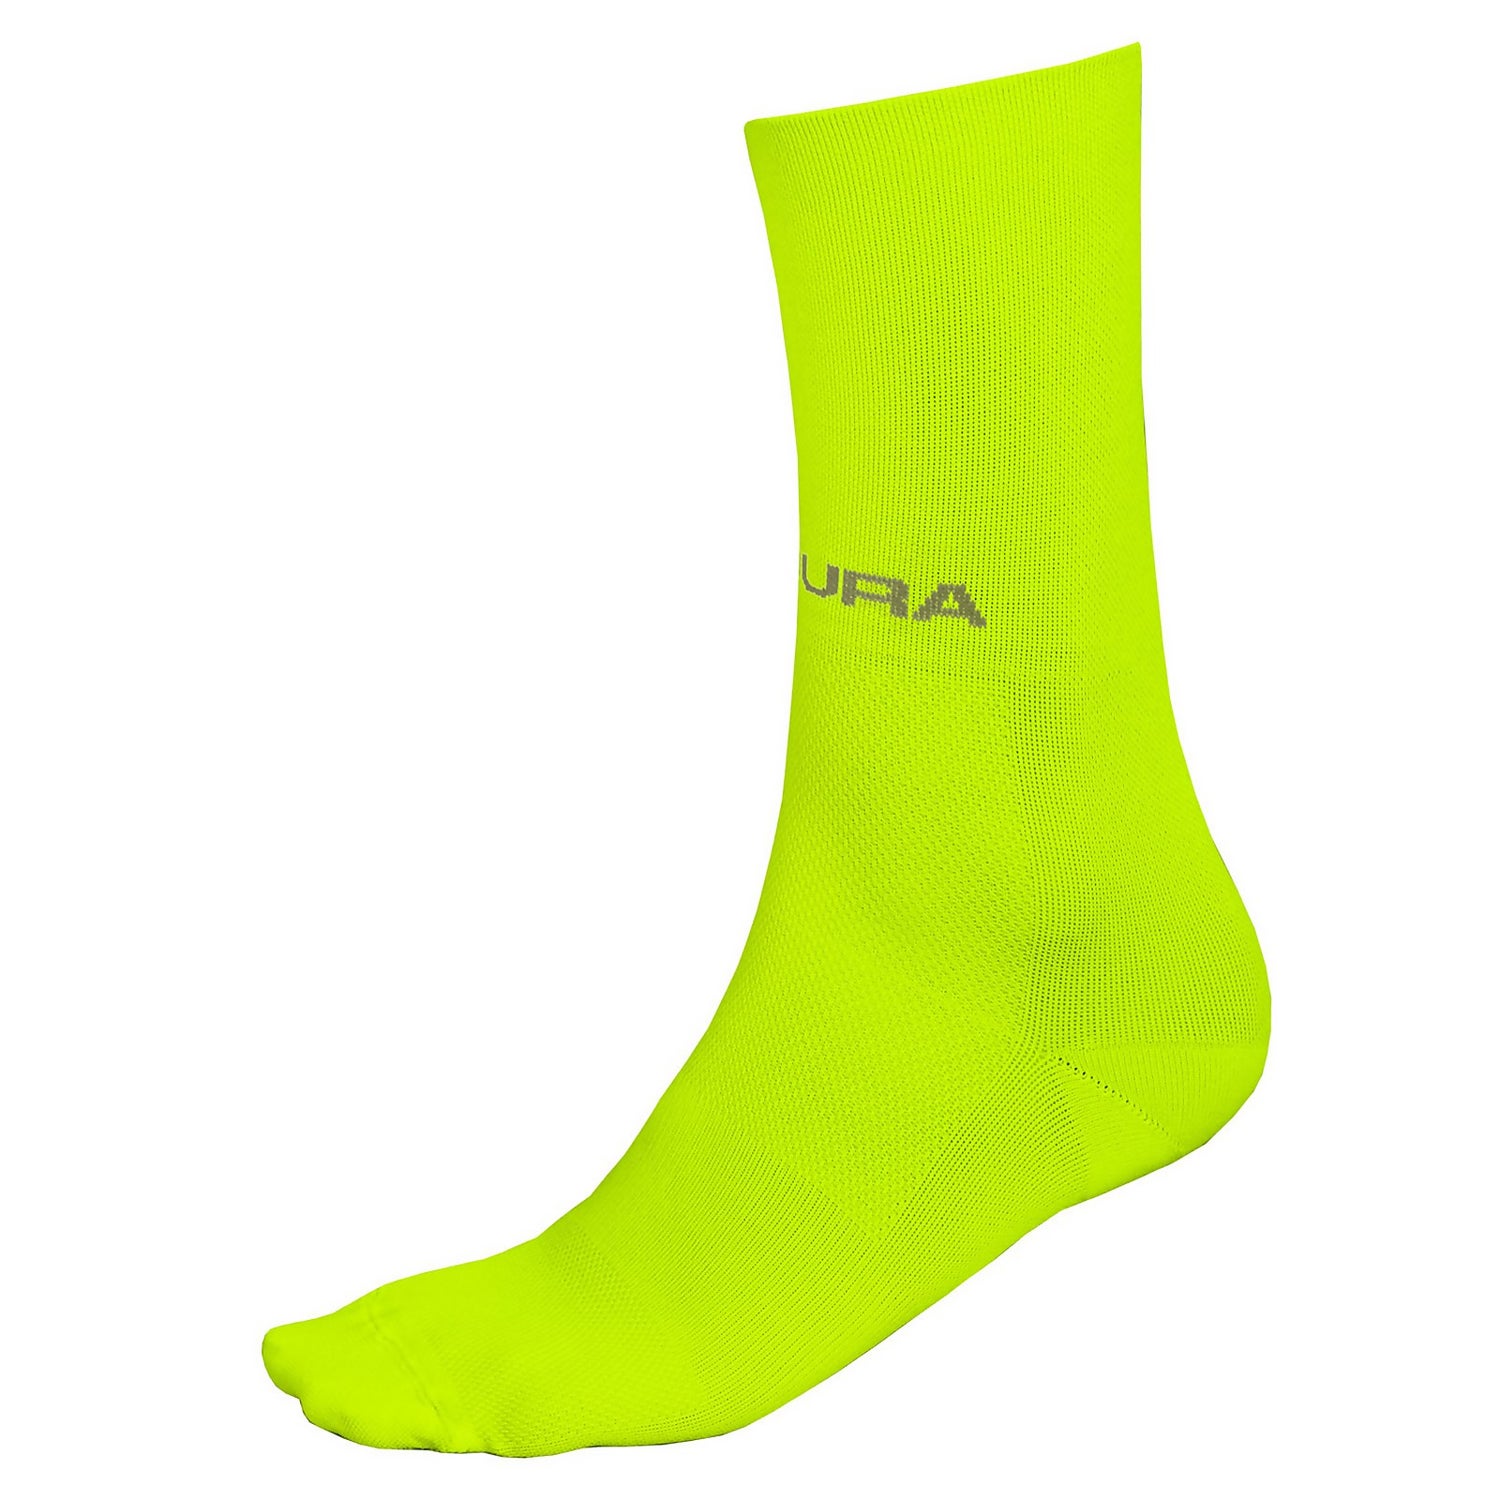 Men's Pro SL Sock II - Hi-Viz Yellow